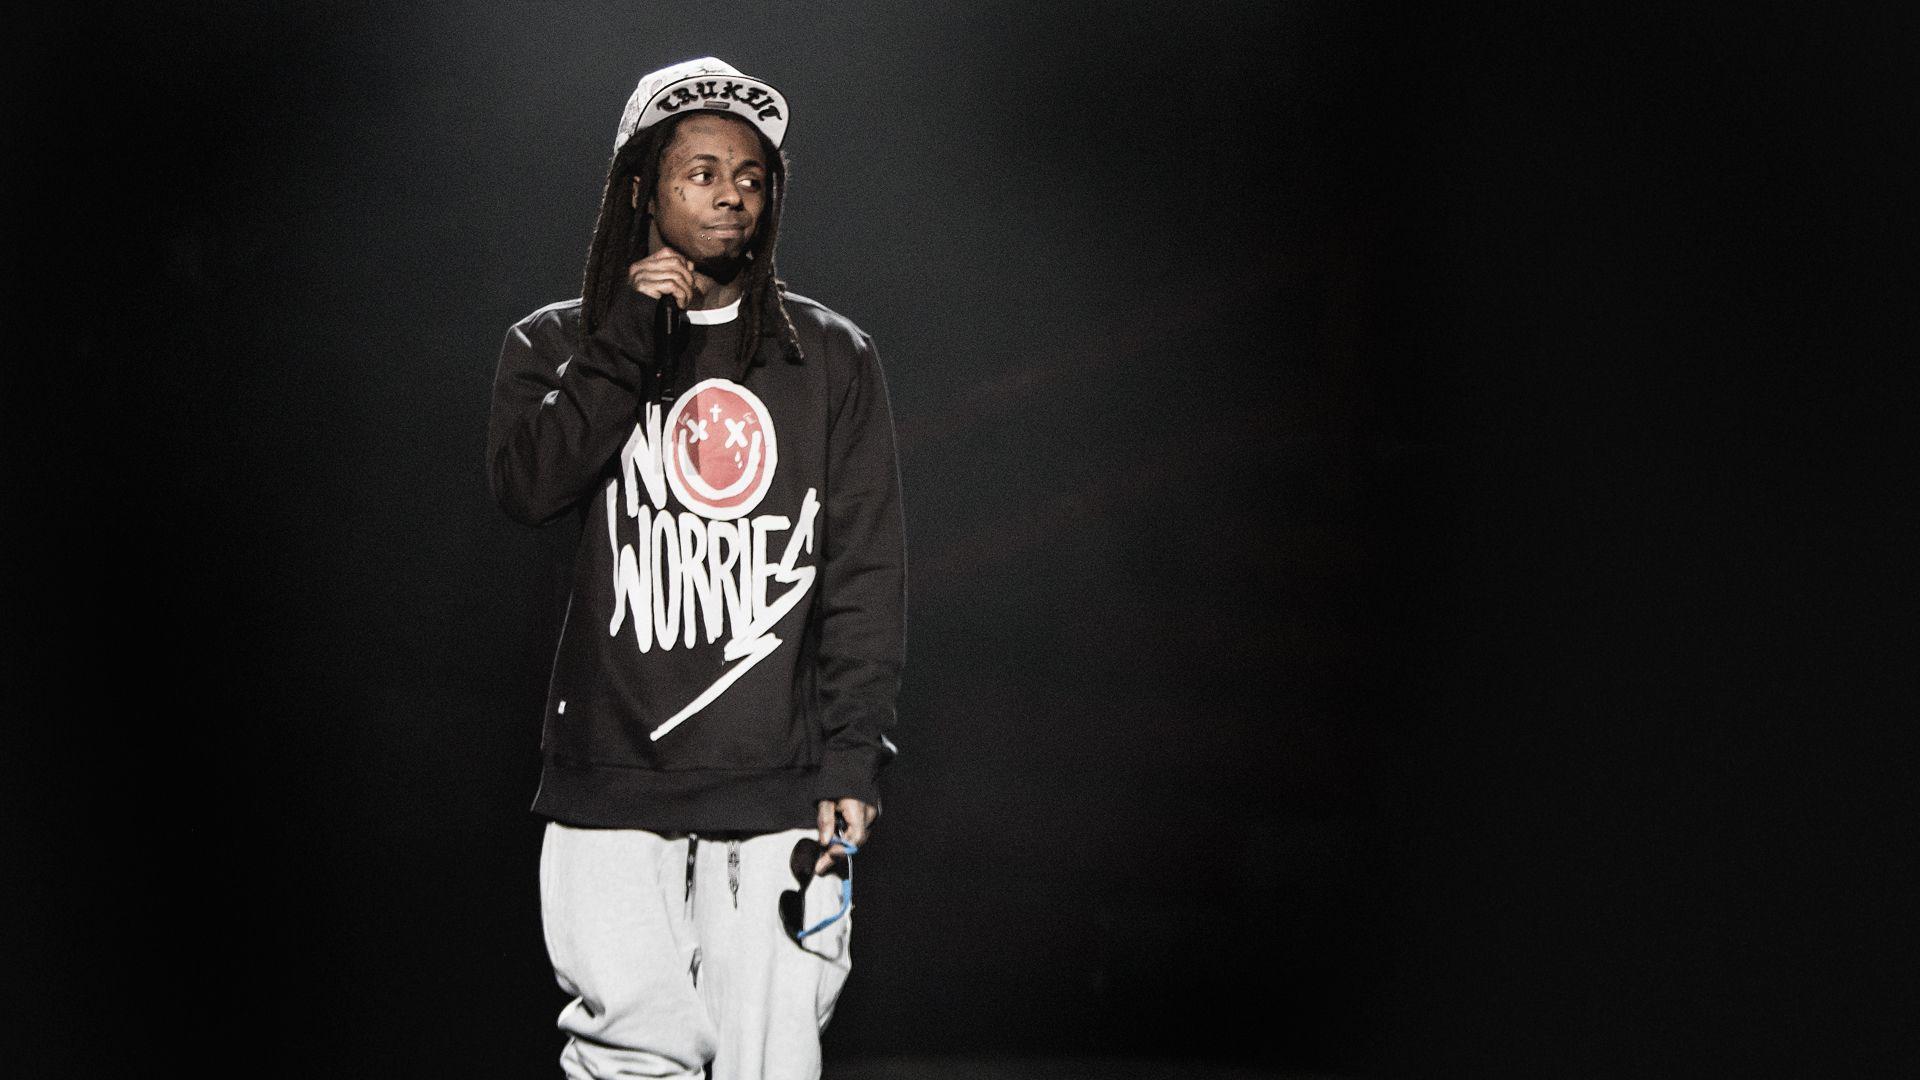 Lil Wayne Free Wallpaper, High Definition, High Quality